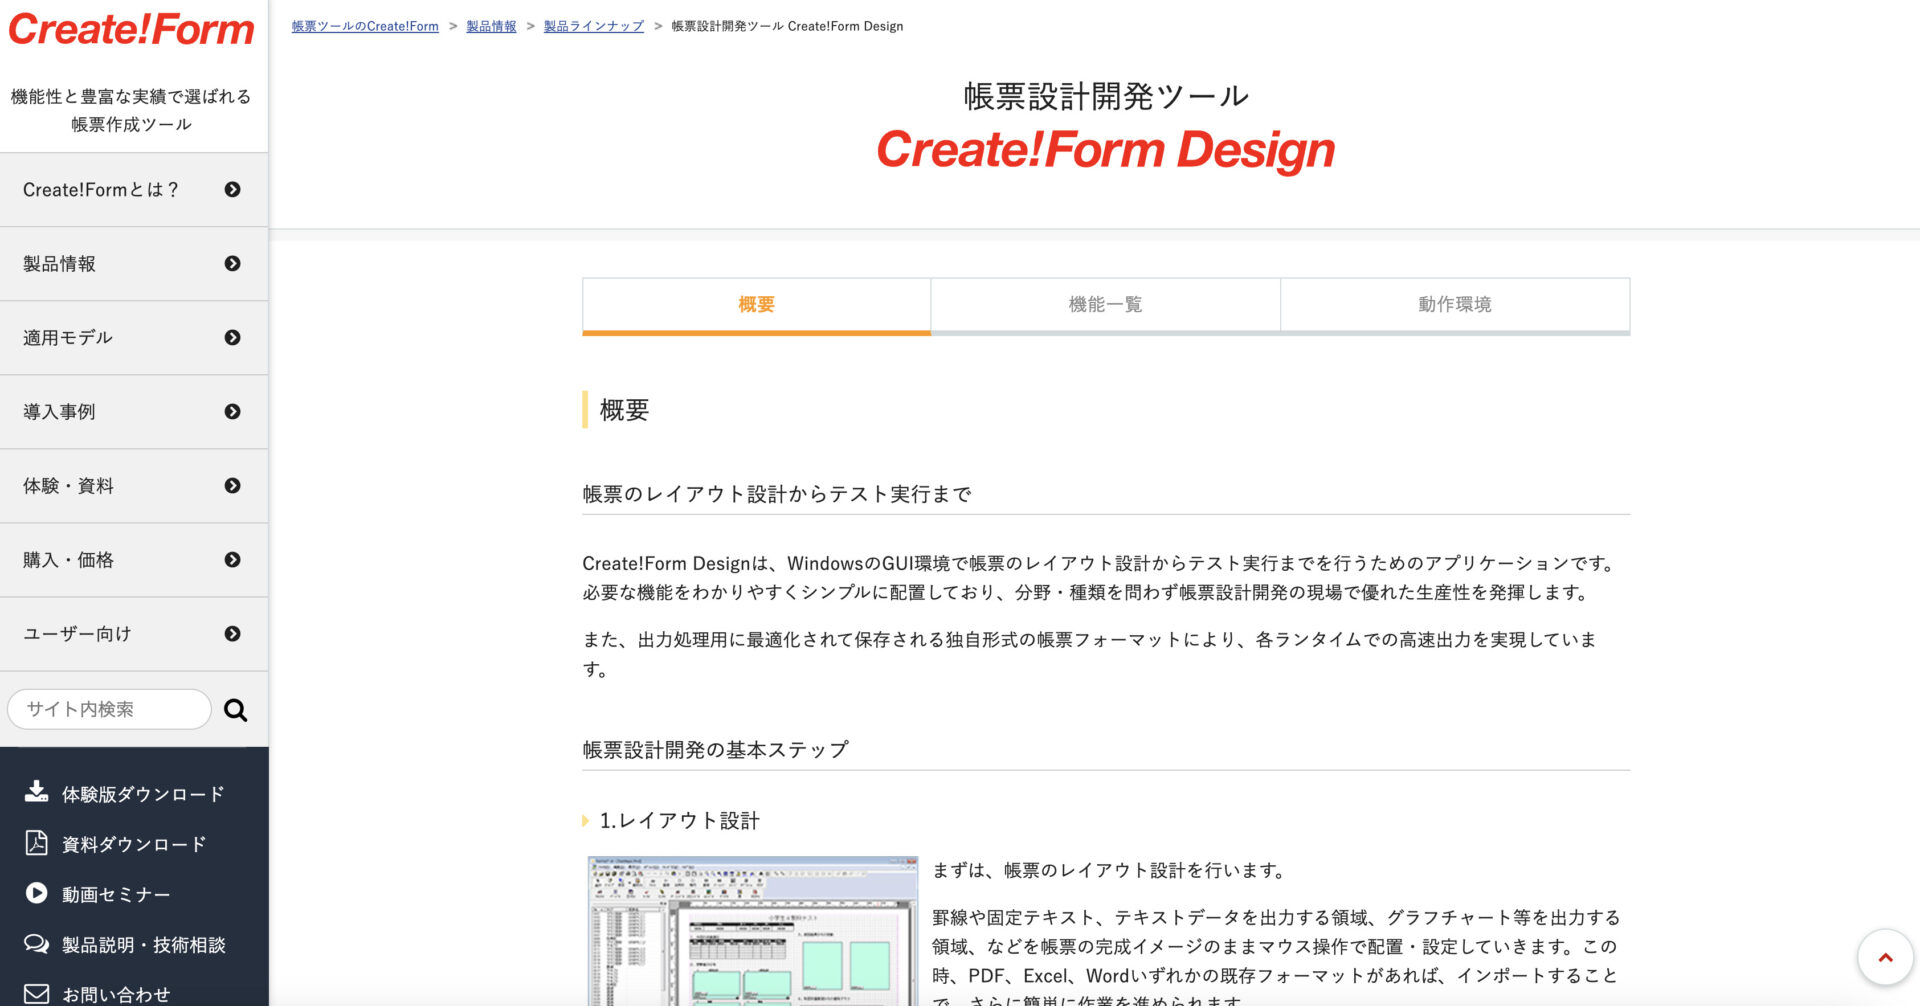 Create!Form Designのトップページ